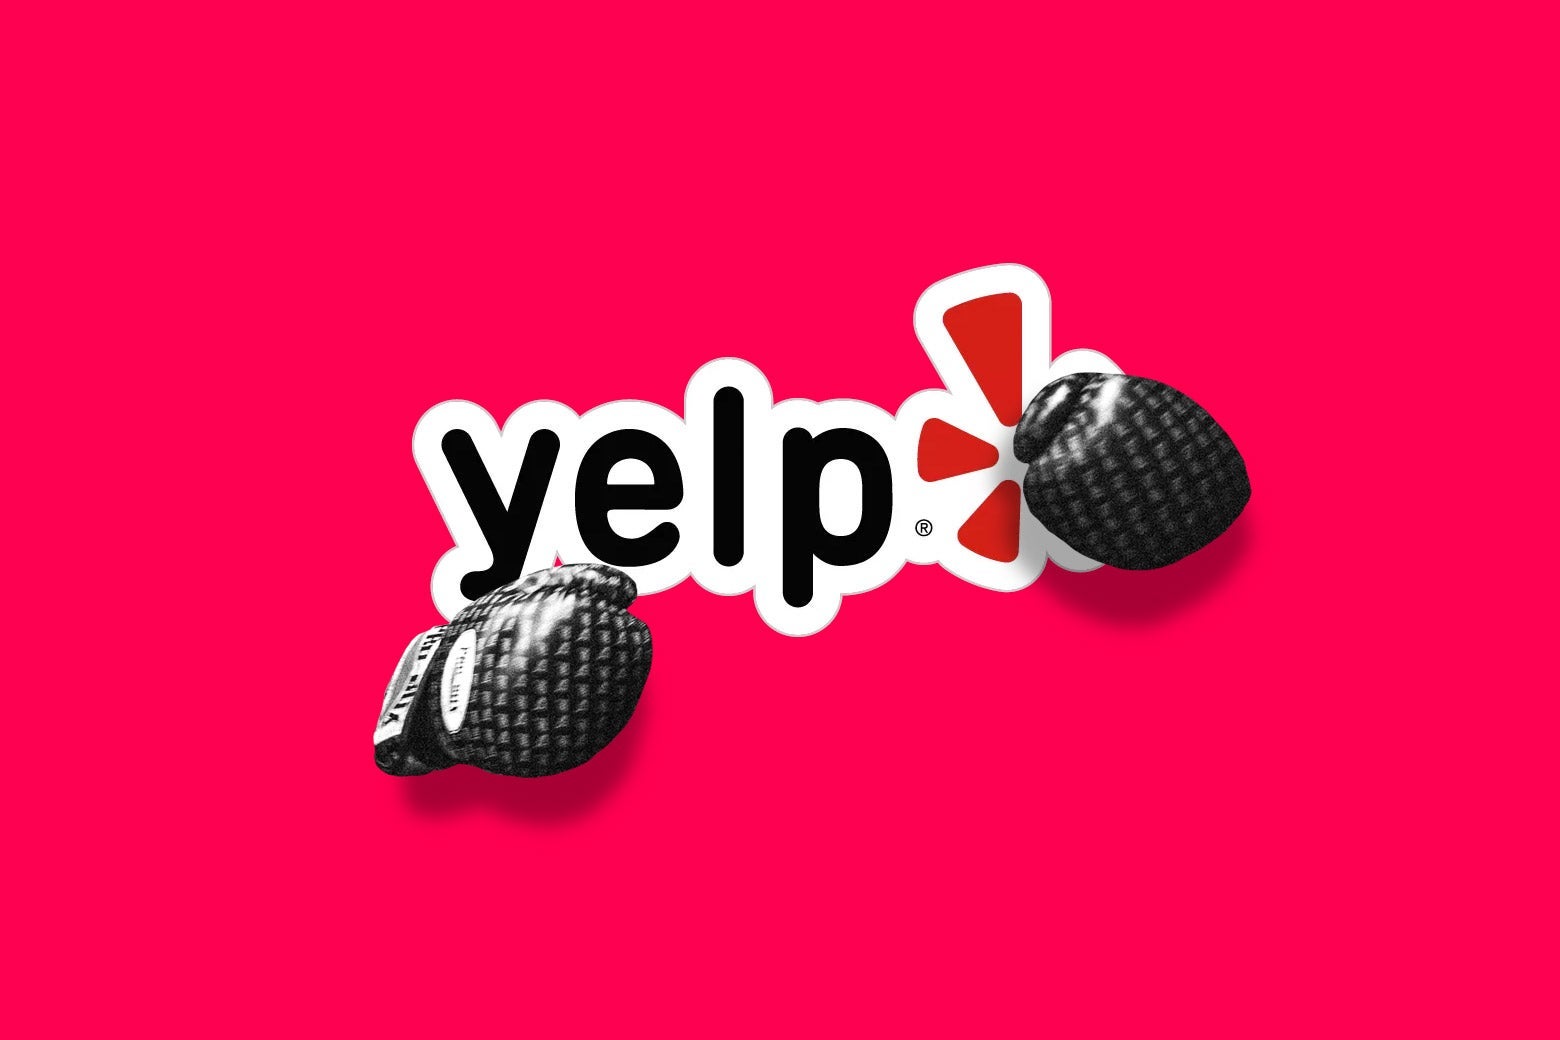 Photo illustration of the Yelp logo wearing boxing gloves.